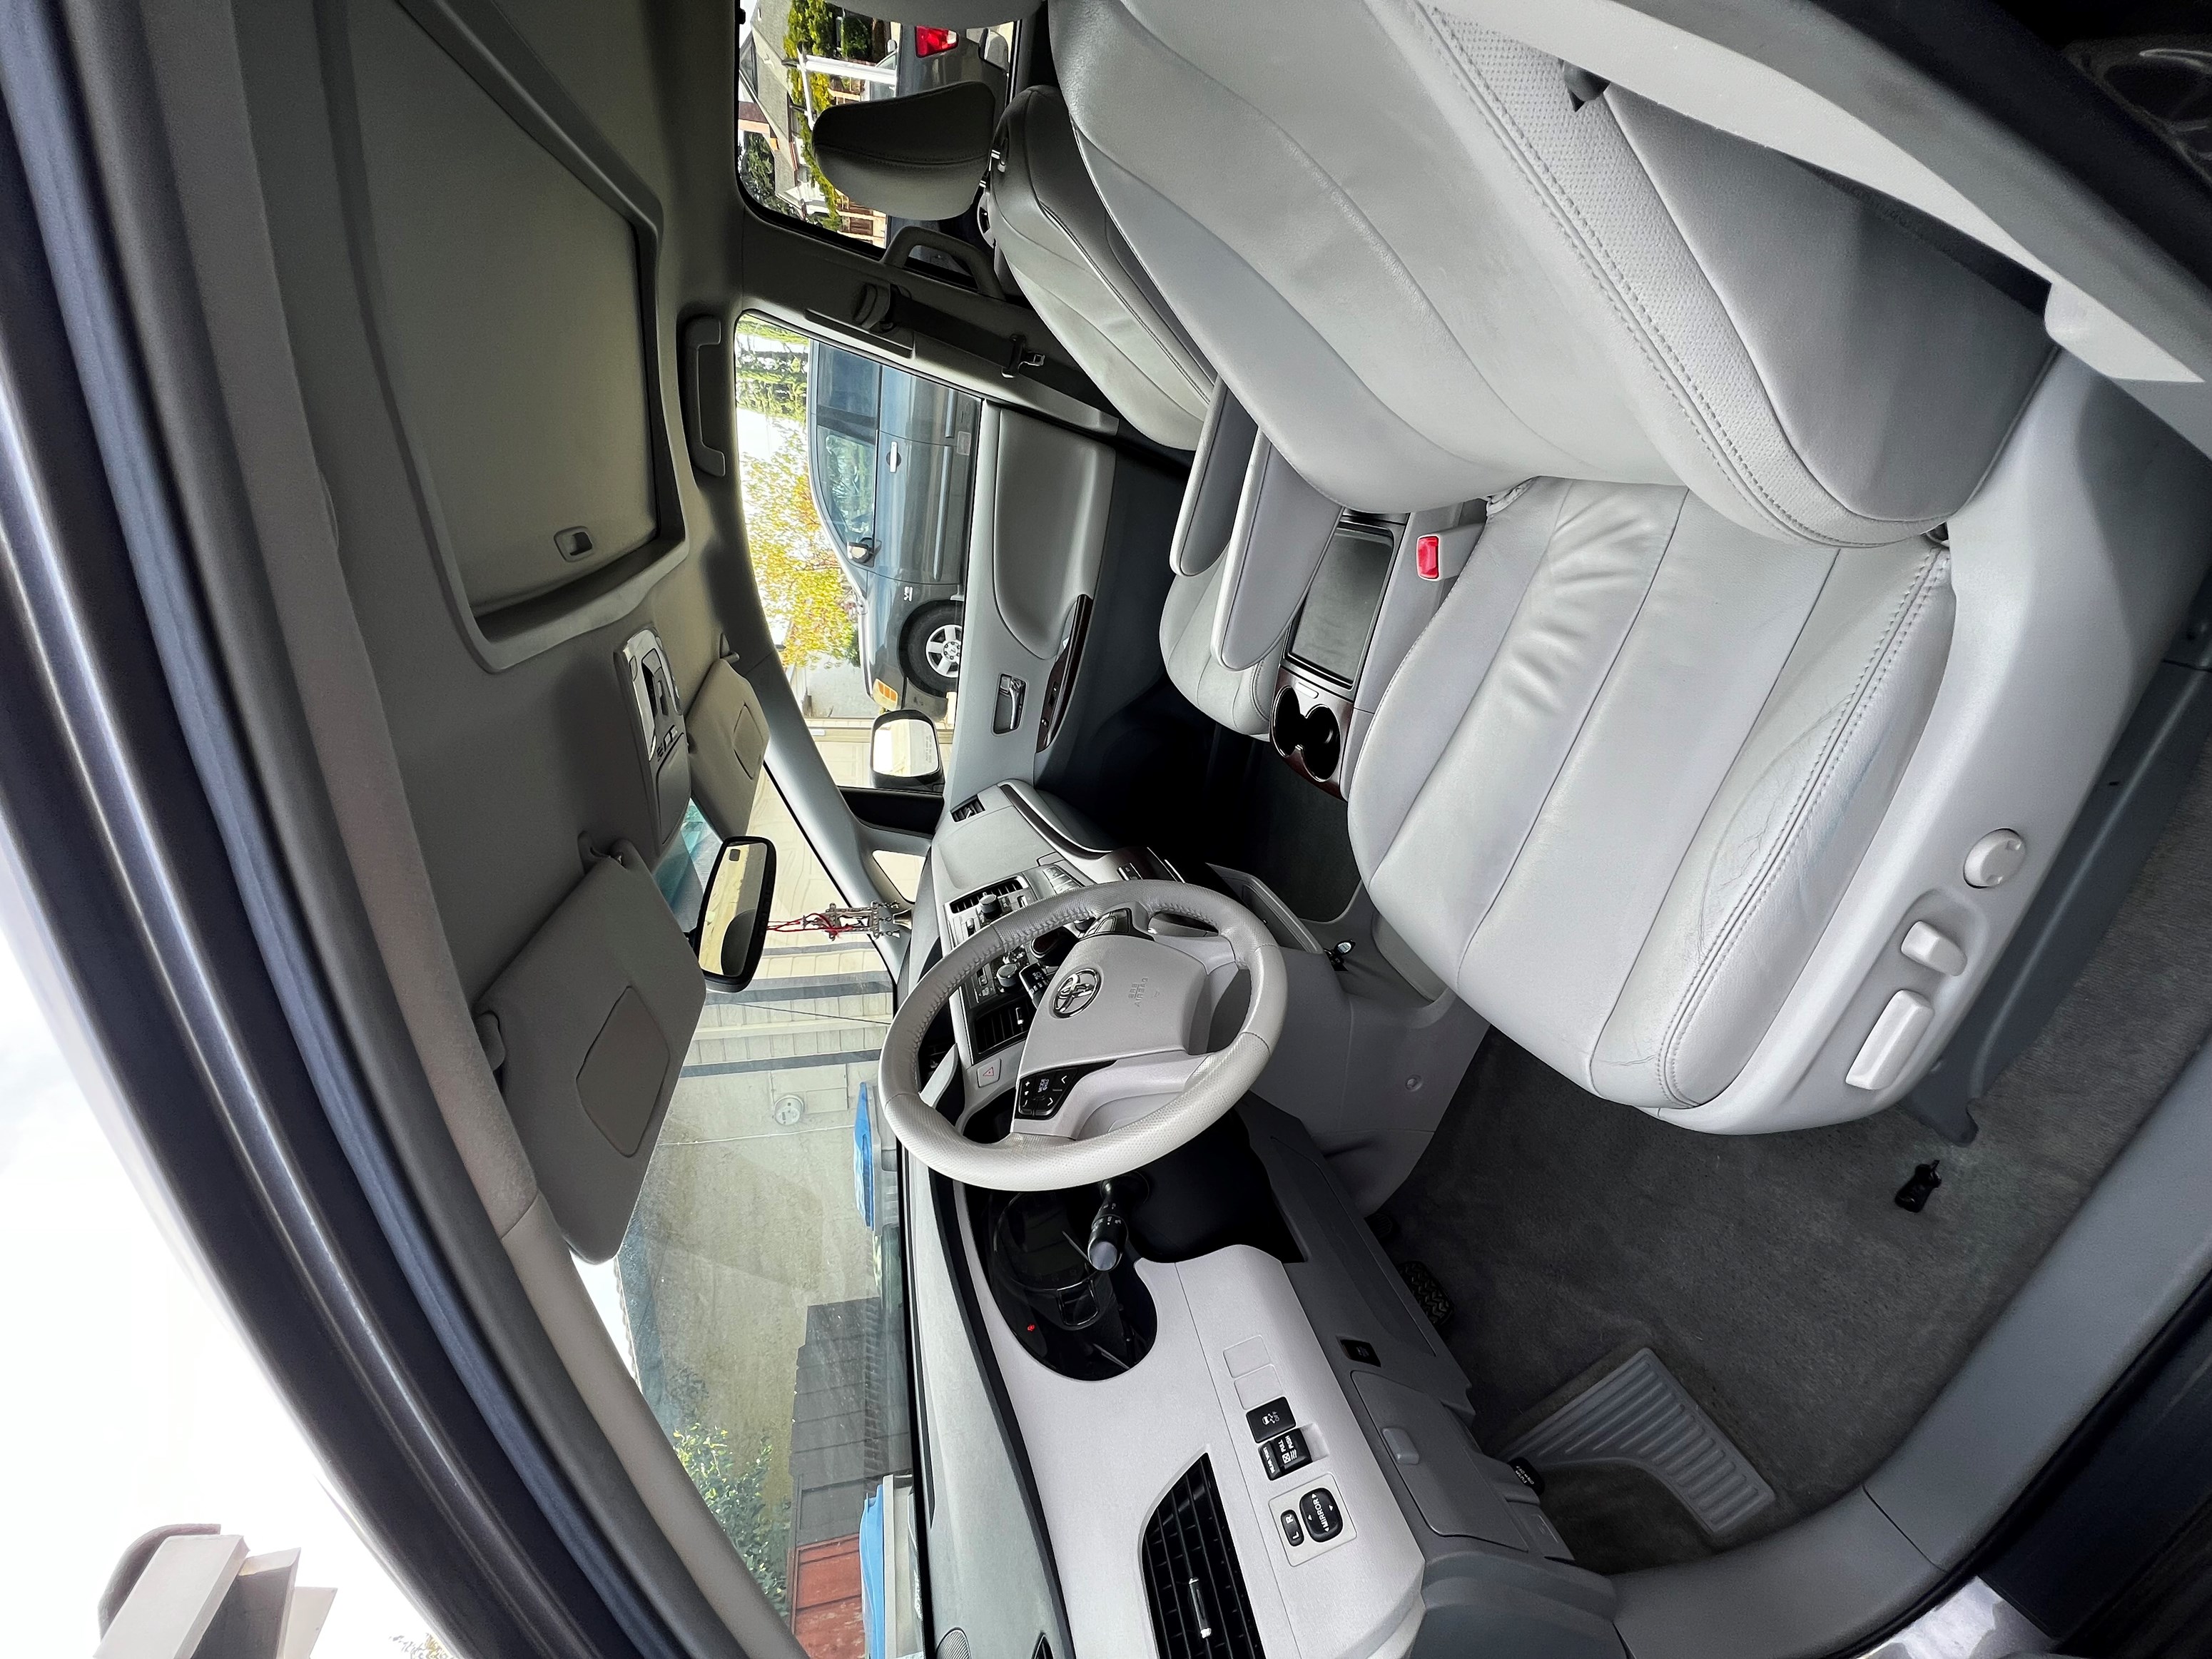 2012 Toyota Sienna XLE 8 Passenger 4drs Minivan Like New